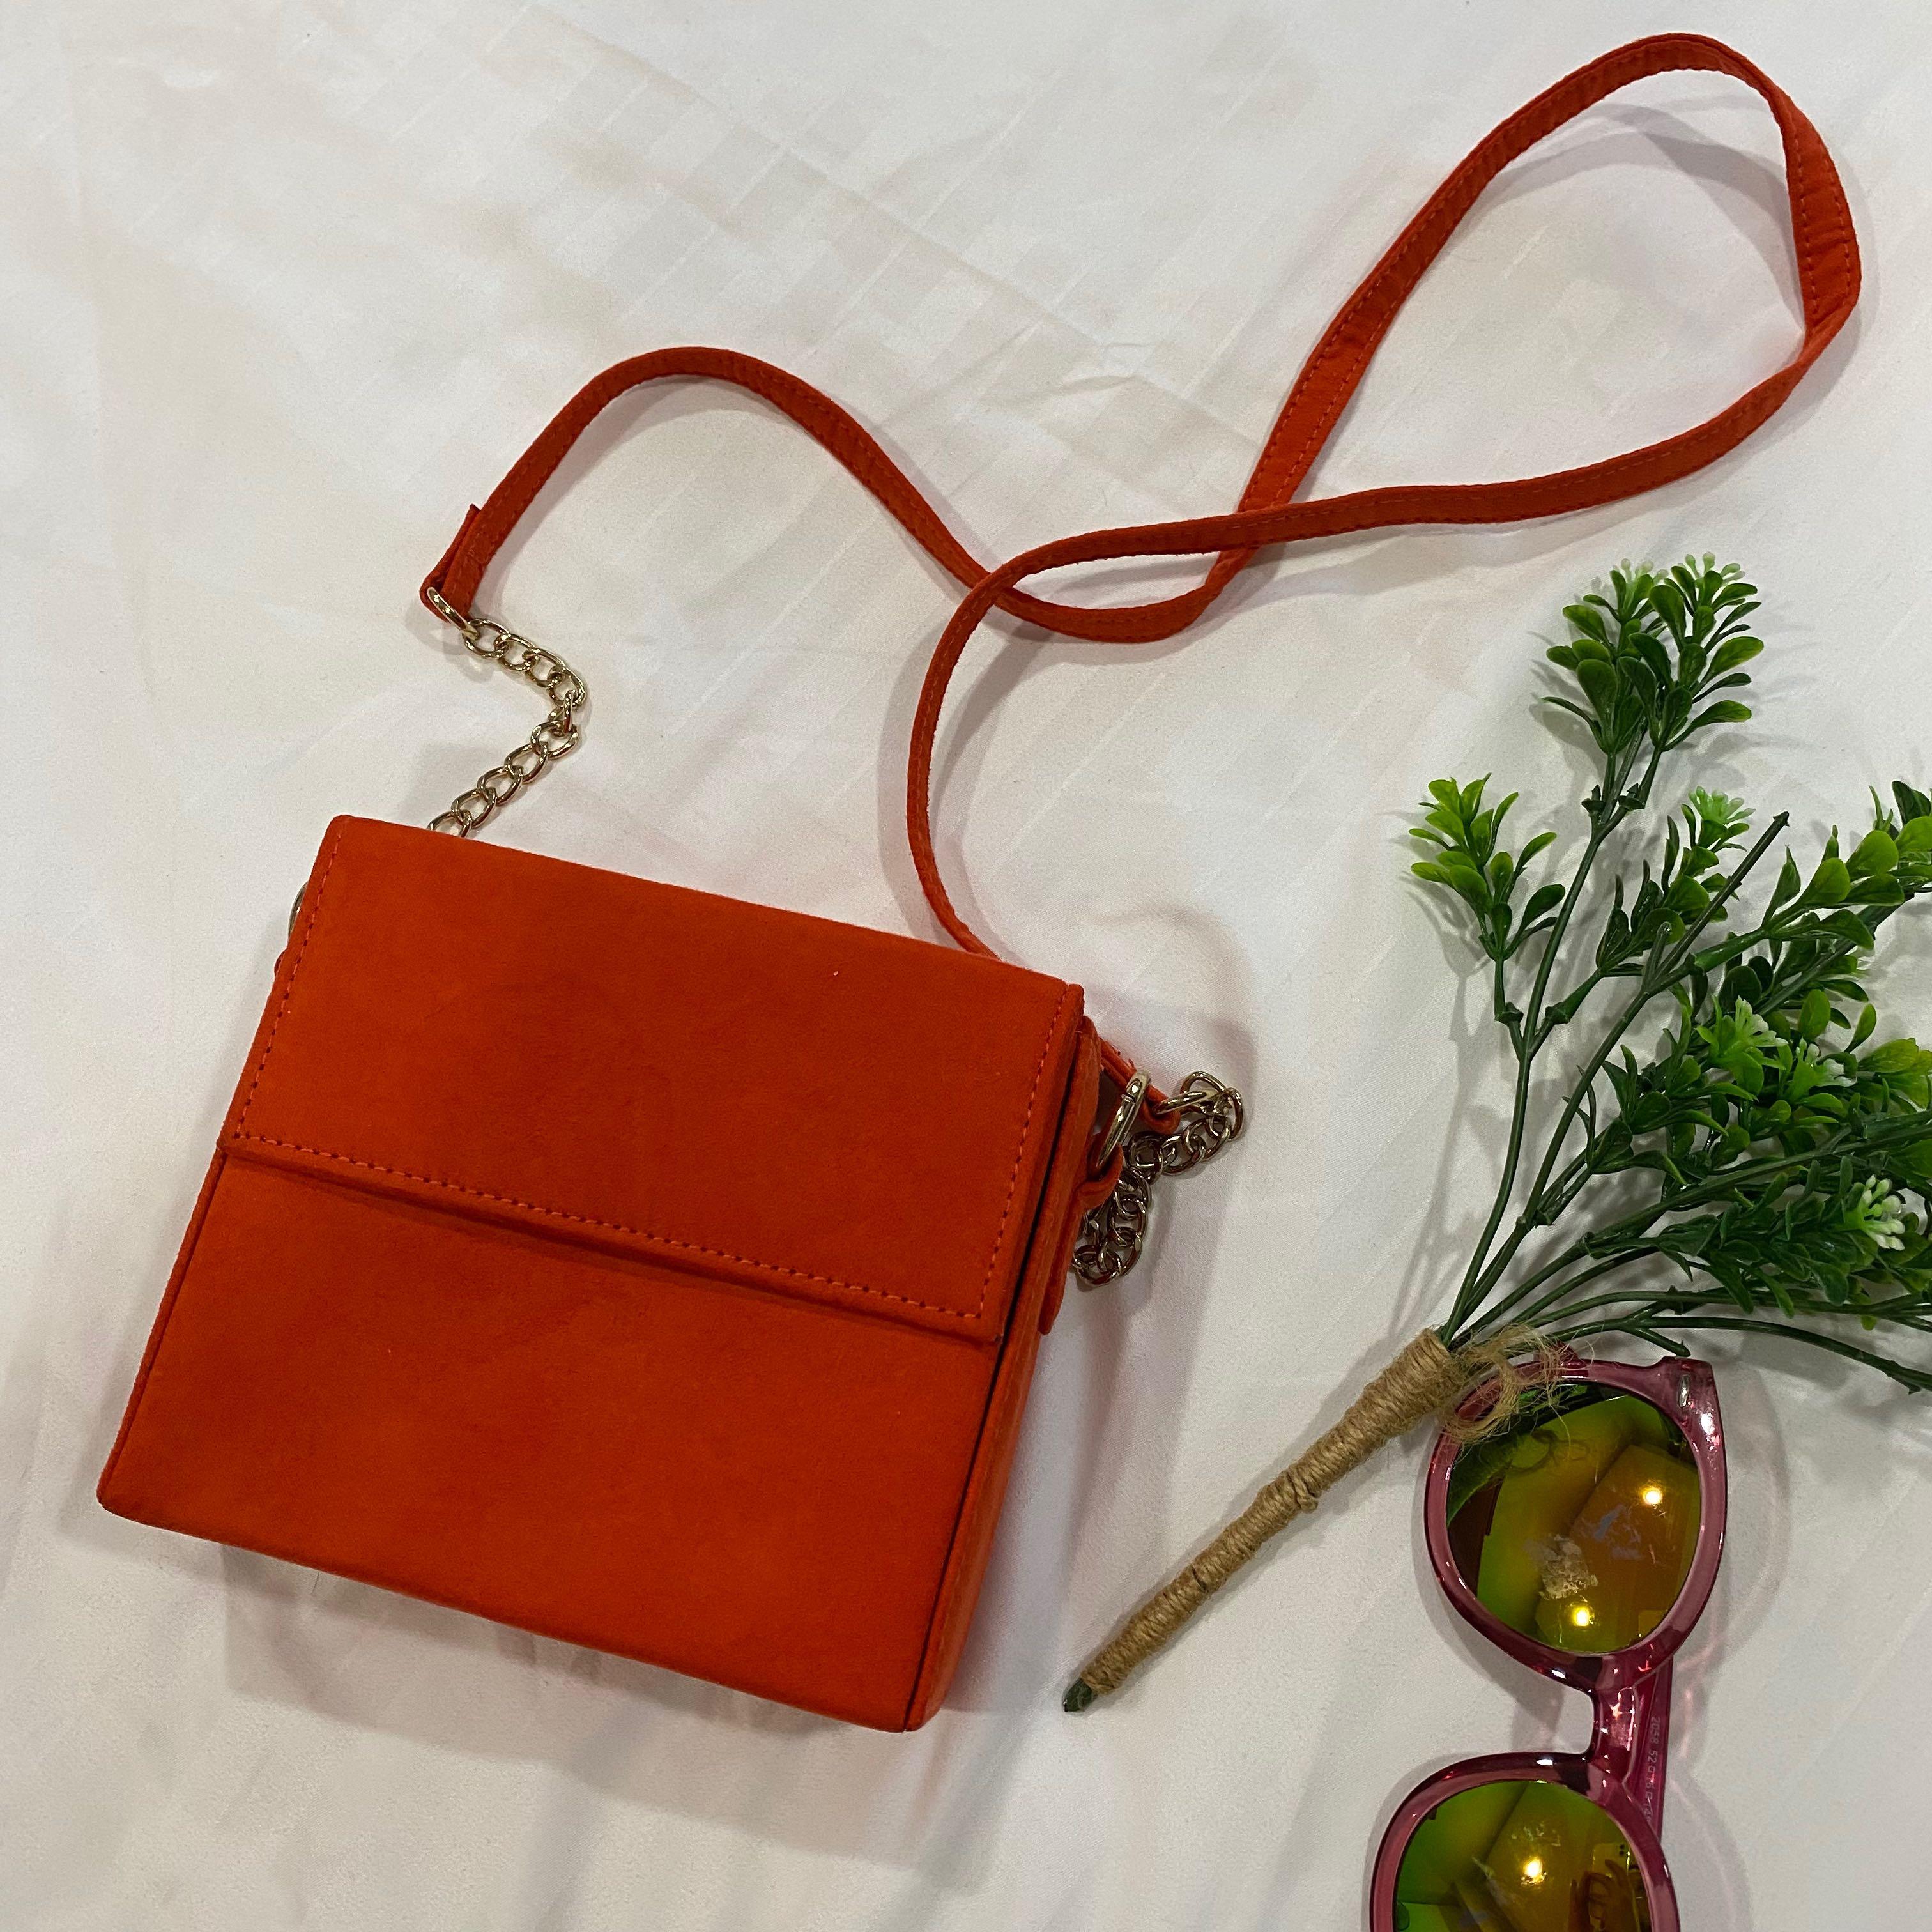 Buy New Look Tan Brown Sling Bag - Handbags for Women 1302091 | Myntra